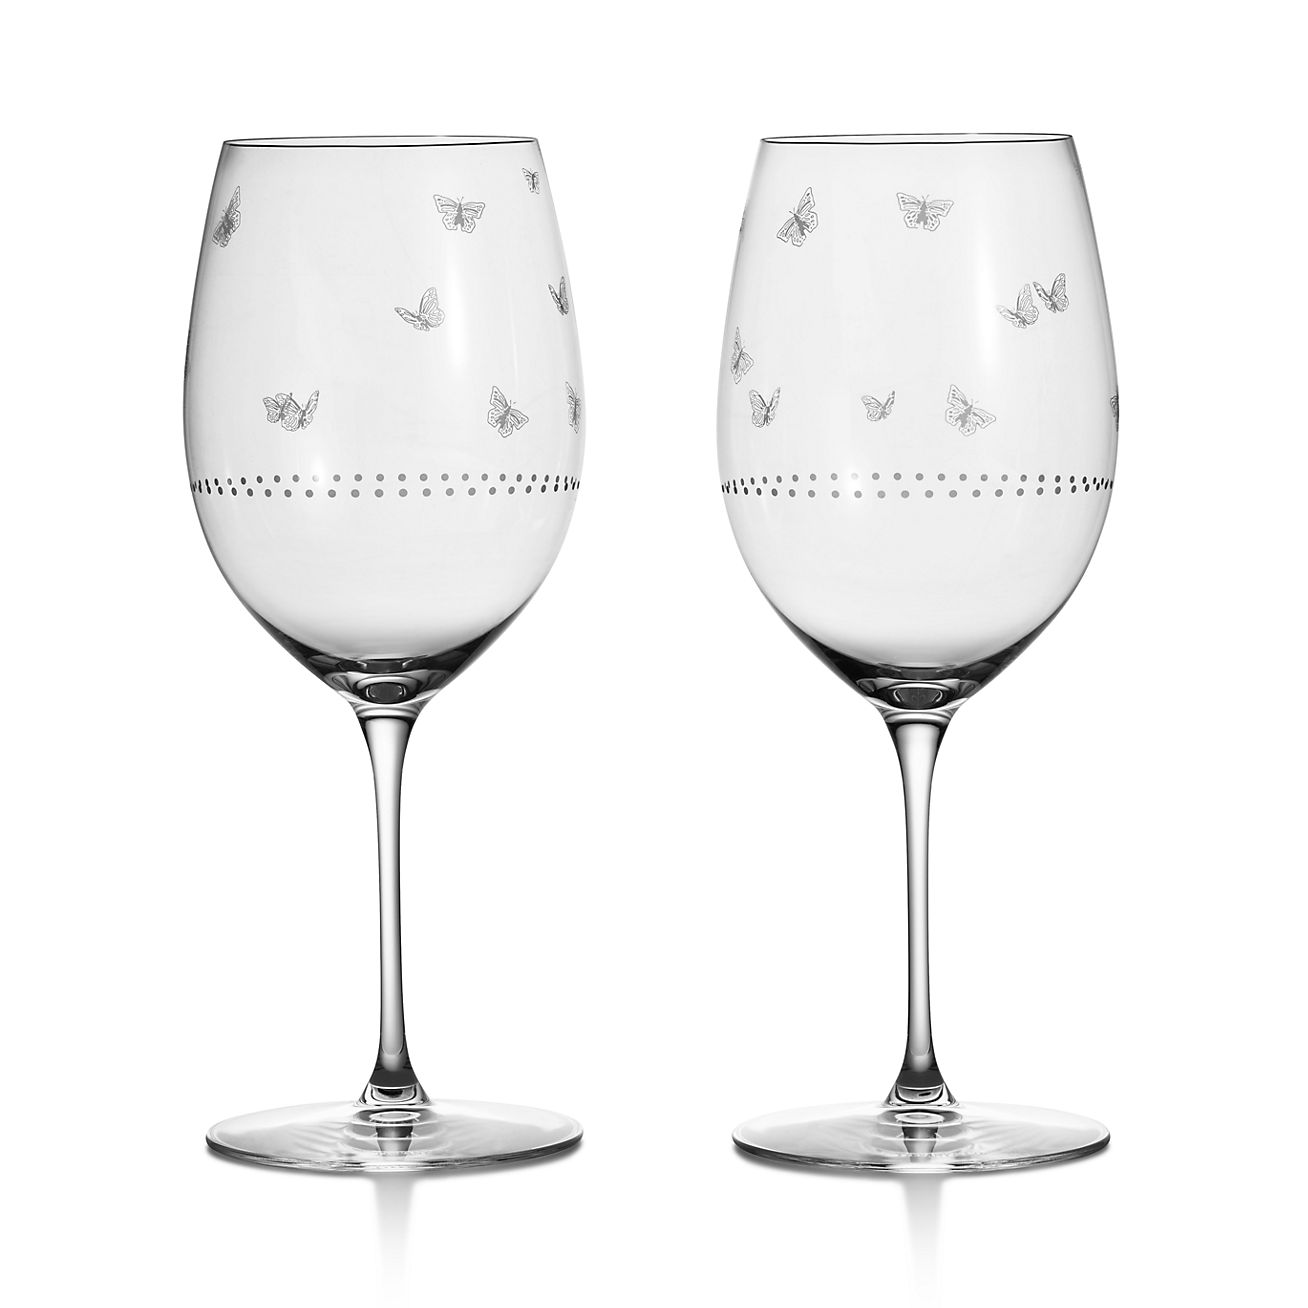 https://media.tiffany.com/is/image/Tiffany/EcomItemL2/tiffany-audubonred-wine-glasses-74226906_1064601_ED.jpg